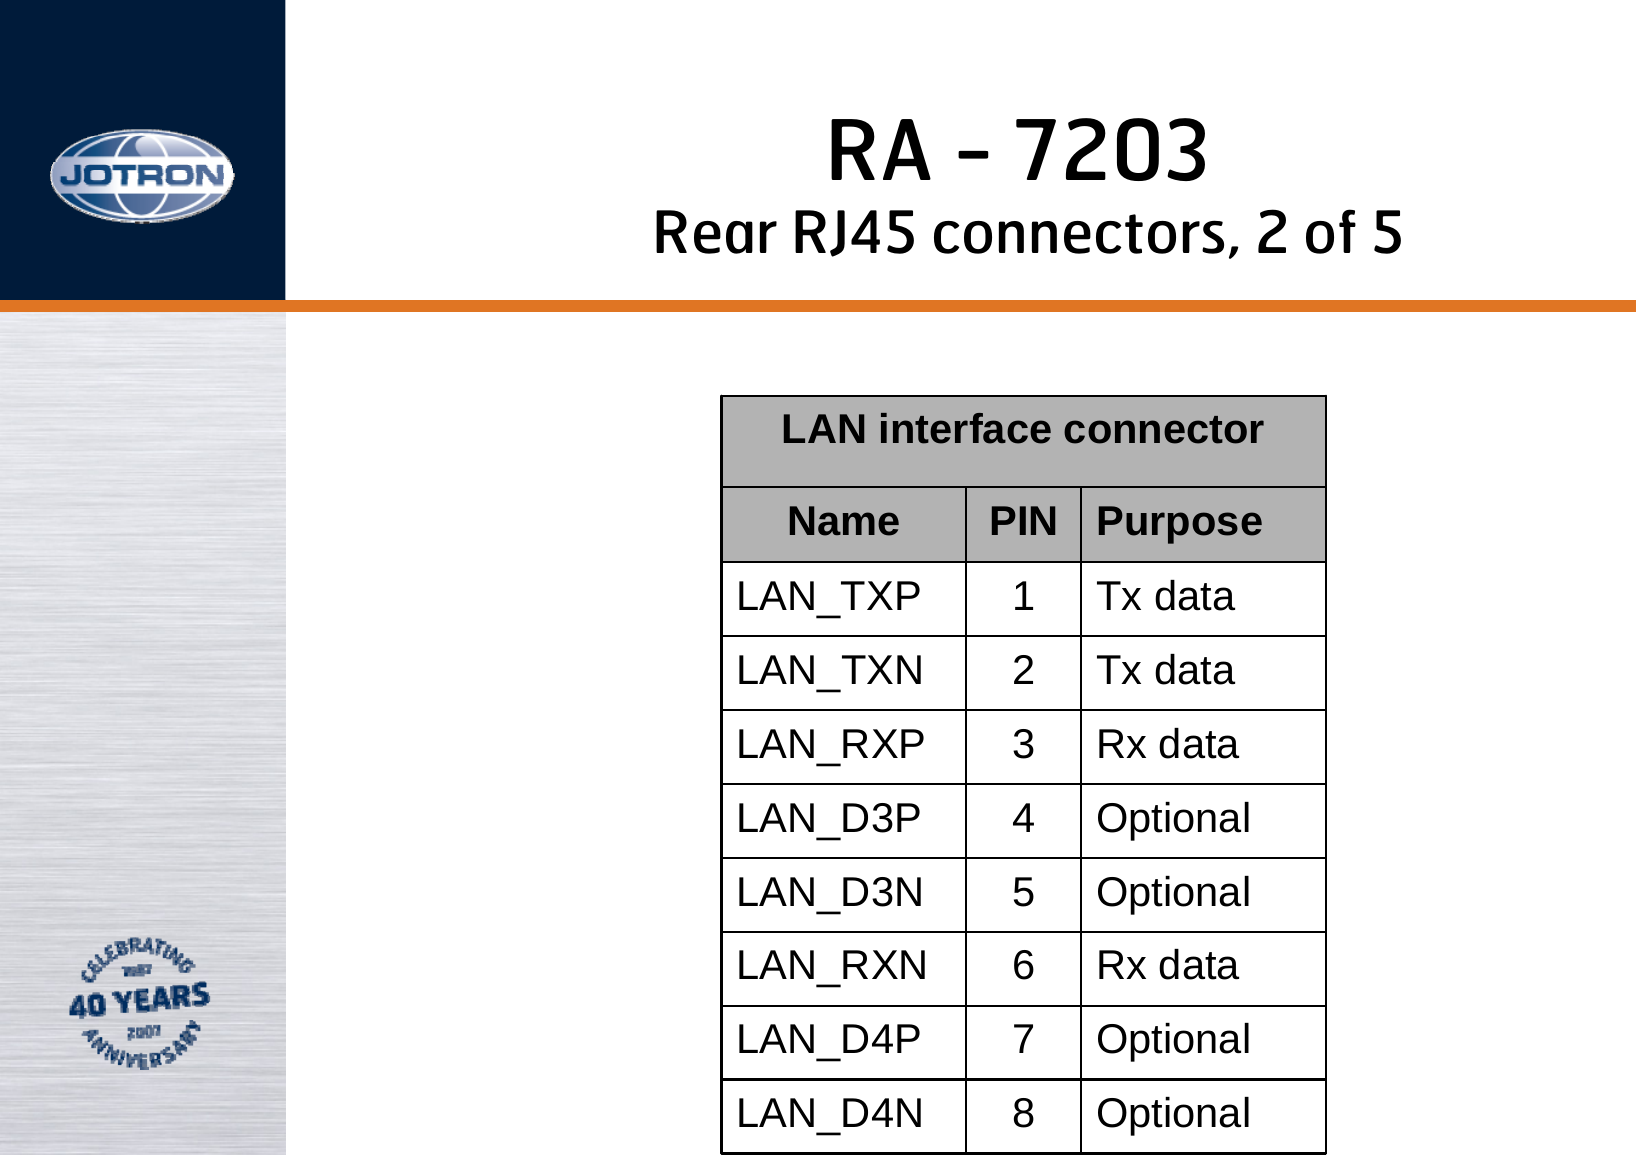 RA - 7203LAN interface connectorName PIN PurposeLAN_TXP 1Tx dataLAN_TXN 2Tx dataLAN_RXP 3Rx dataLAN_D3P 4OptionalLAN_D3N 5OptionalLAN_RXN 6Rx dataLAN_D4P 7OptionalLAN_D4N 8OptionalRear RJ45 connectors, 2 of 5